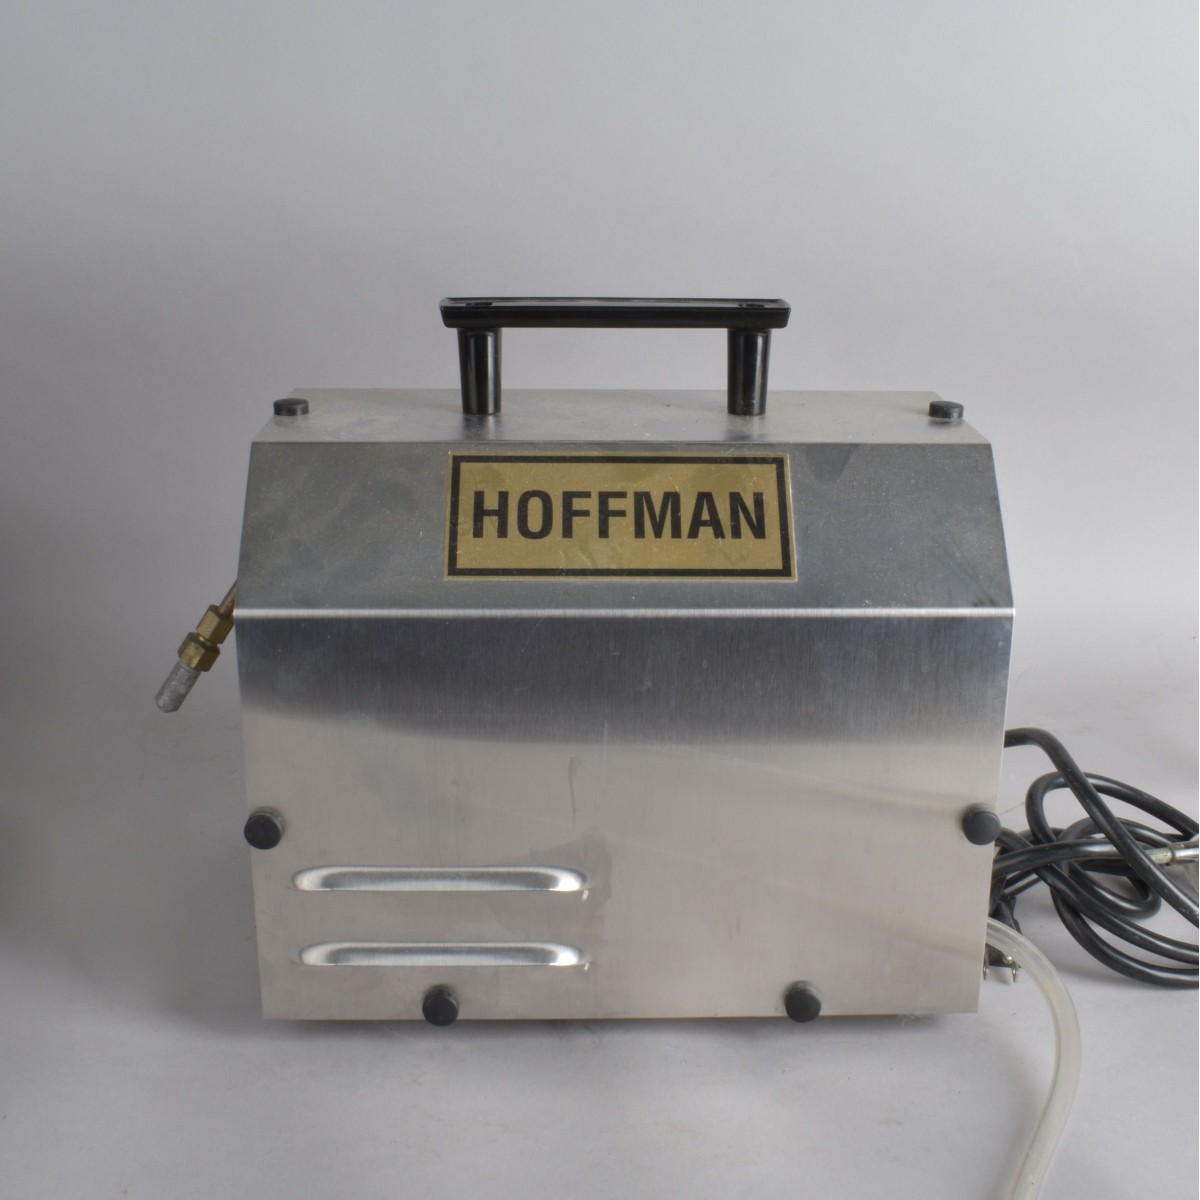 Hoffman Gem-1 Jewelry Steamer